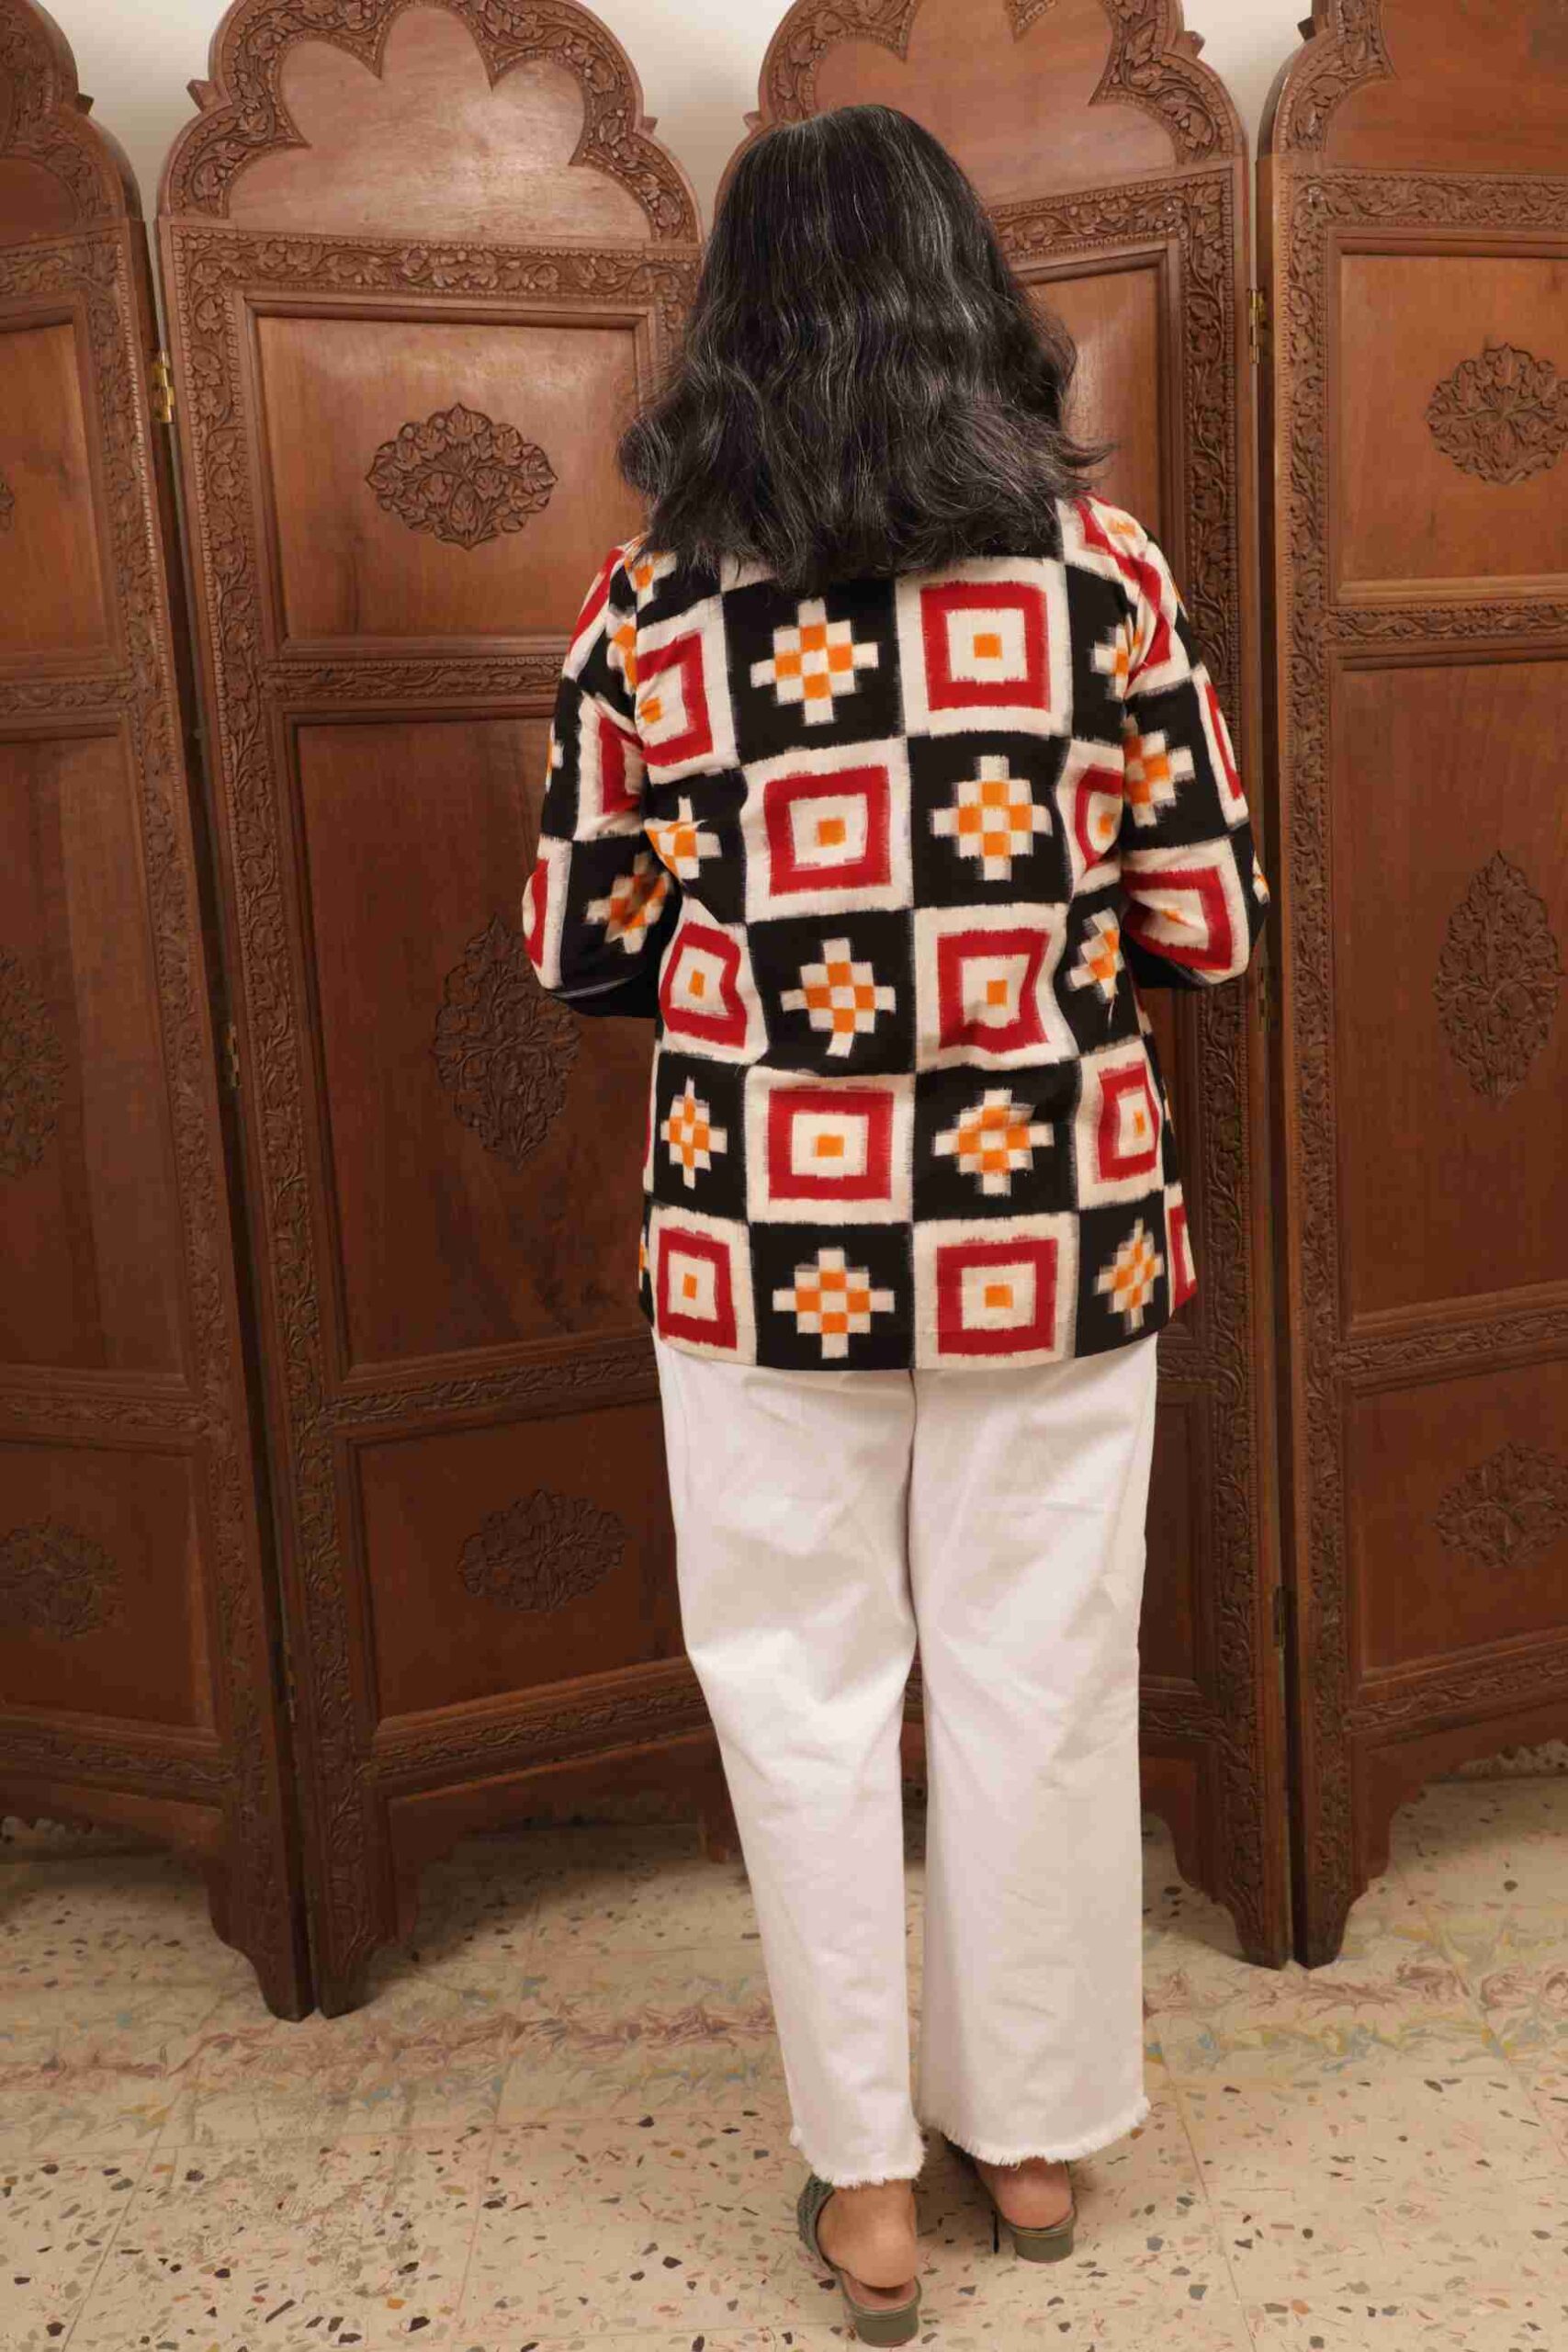 Buy Embroidered Jacket / Embellished Jacket / Kutch Rajasthani Online in  India - Etsy | Kutch work designs, Hand embroidery designs, Embroidery  designs fashion